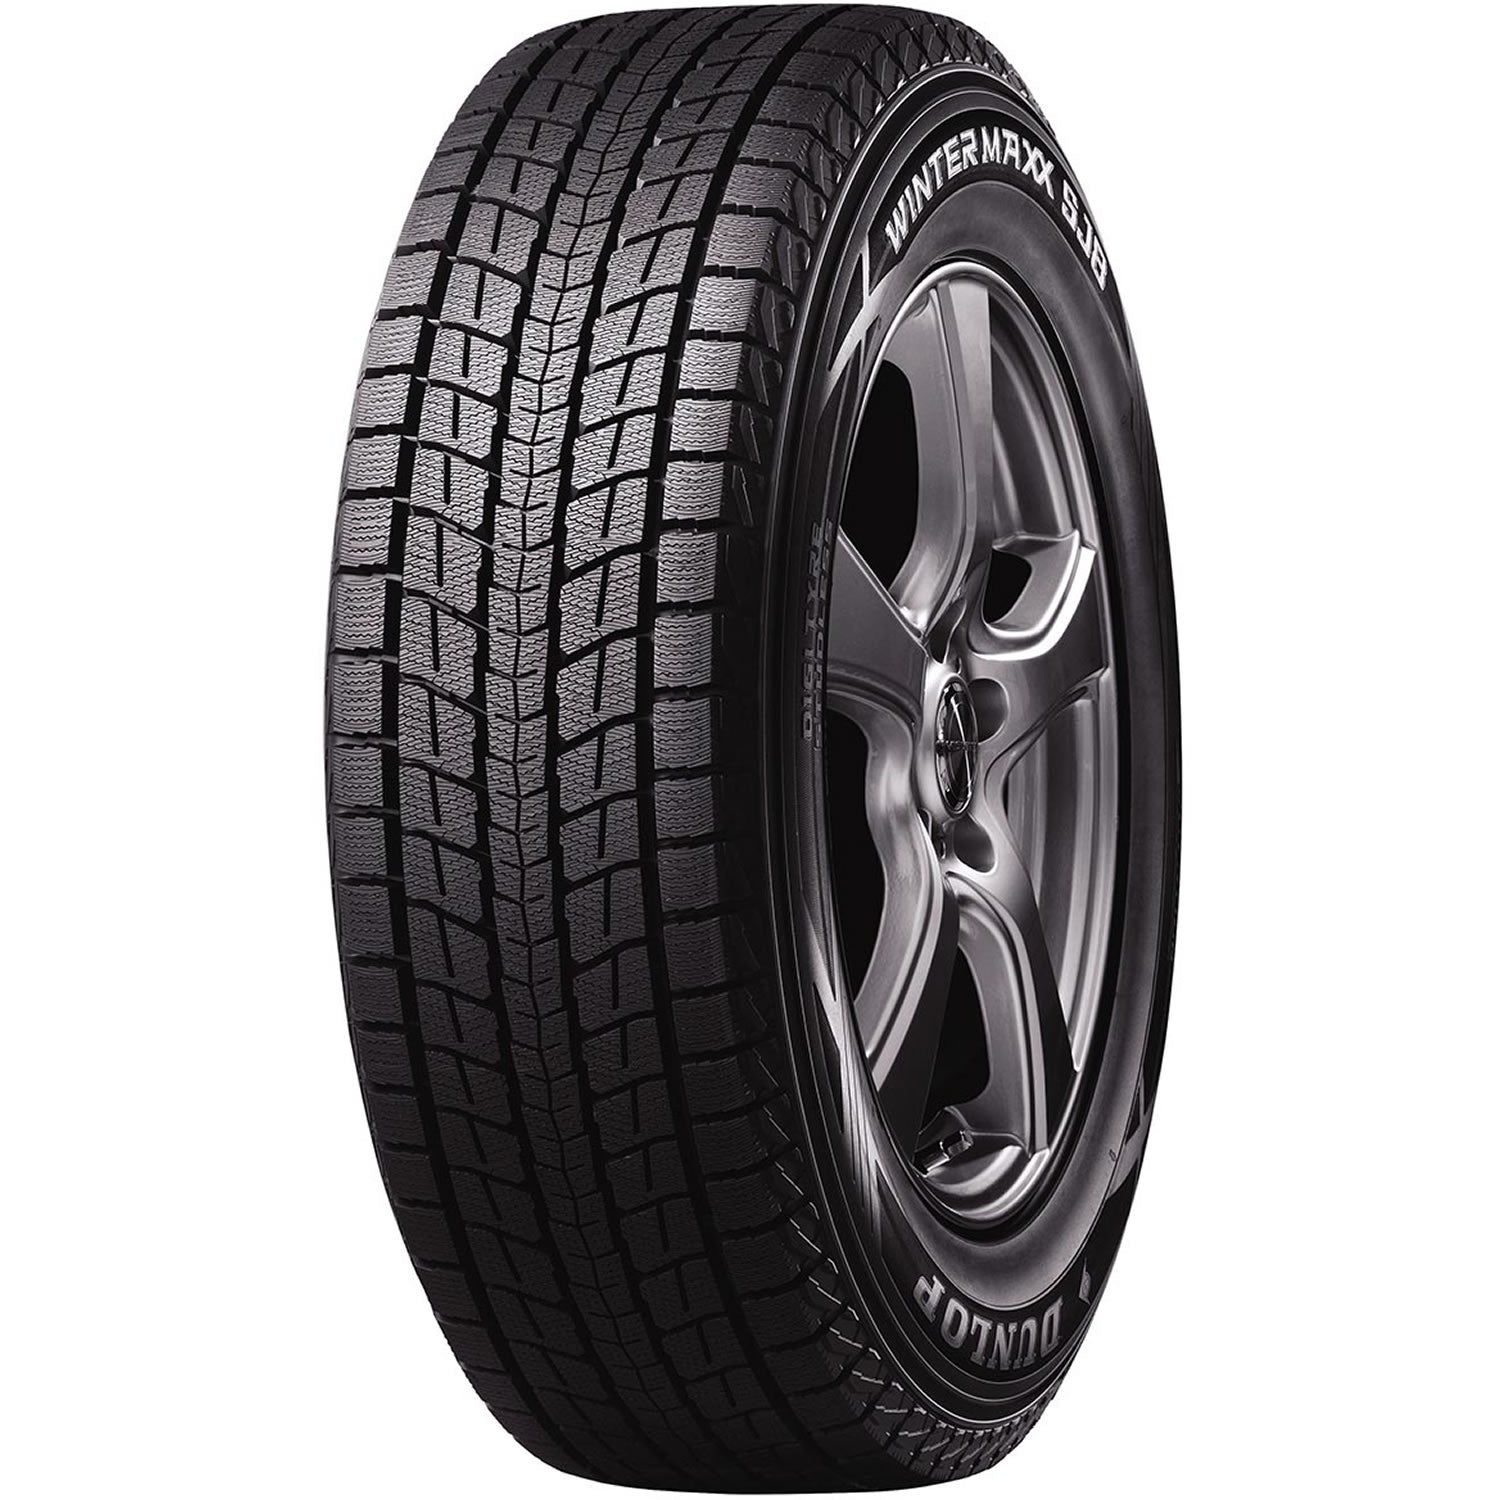 DUNLOP WINTER MAXX SJ8 275/65R18 (32.1X10.8R 18) Tires